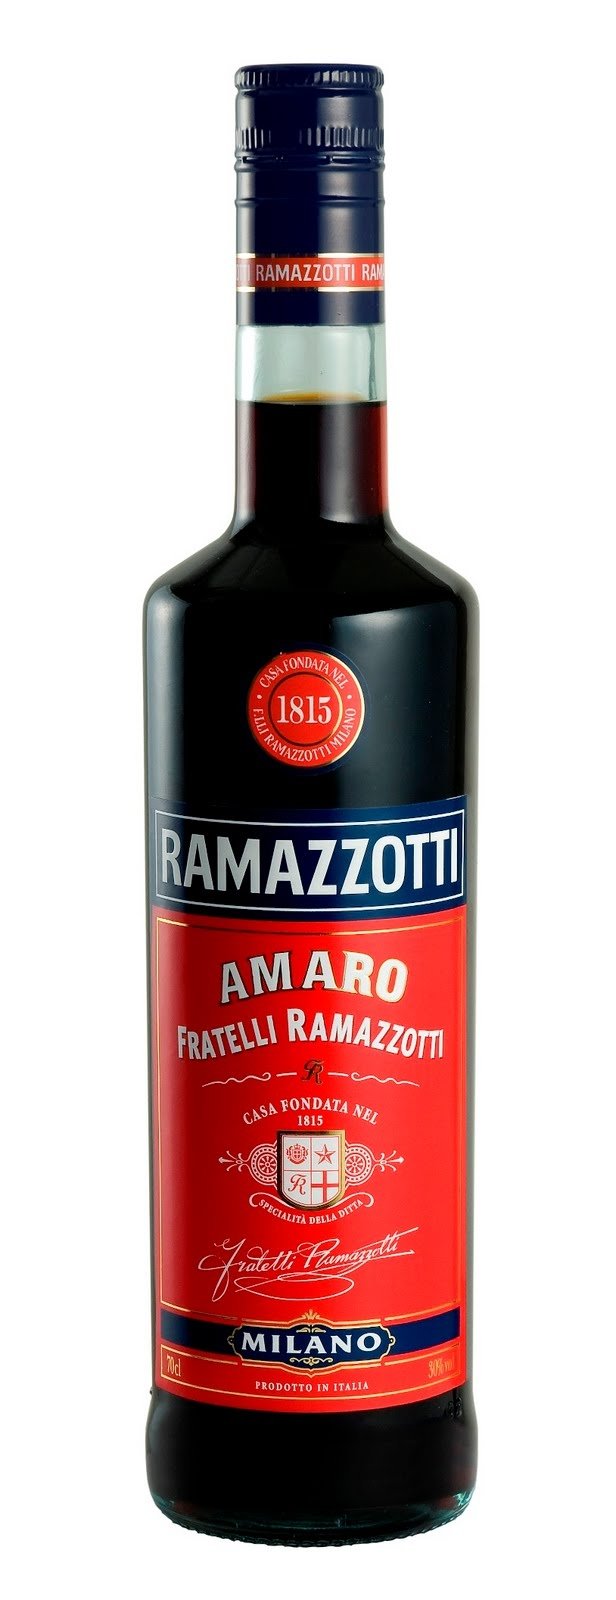 Ramazotti Amaro